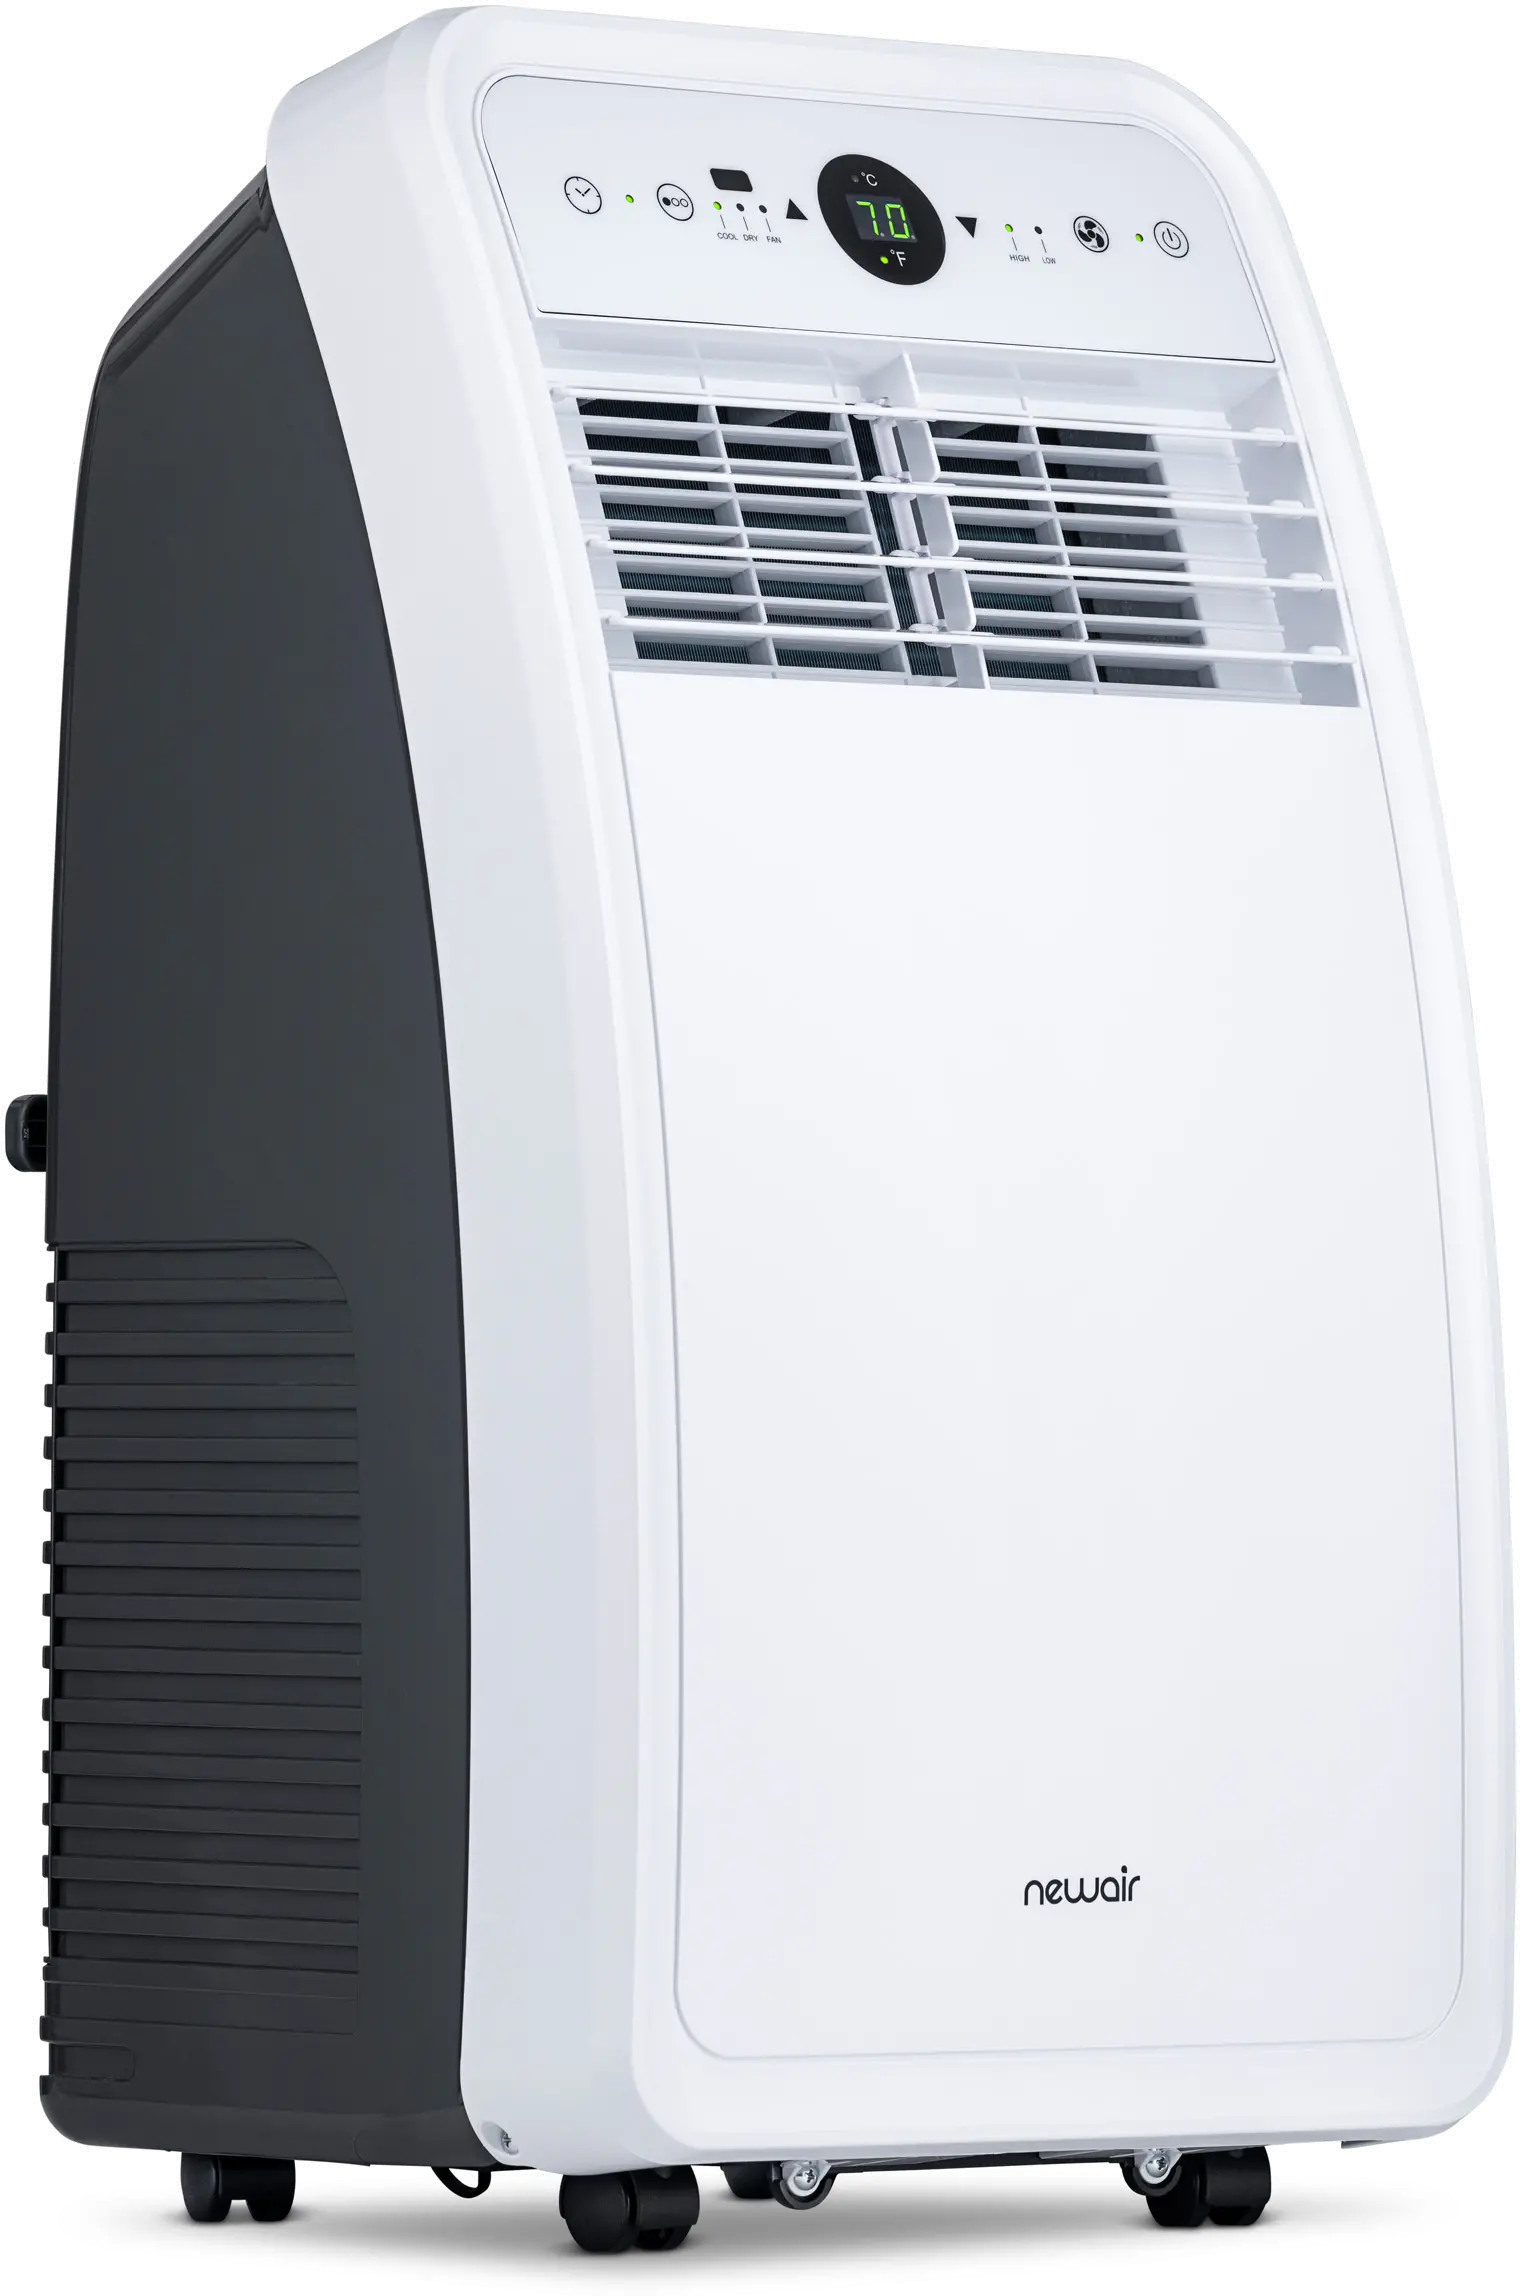 New Air Compact 8, 000 BTU Portable Air Conditioner